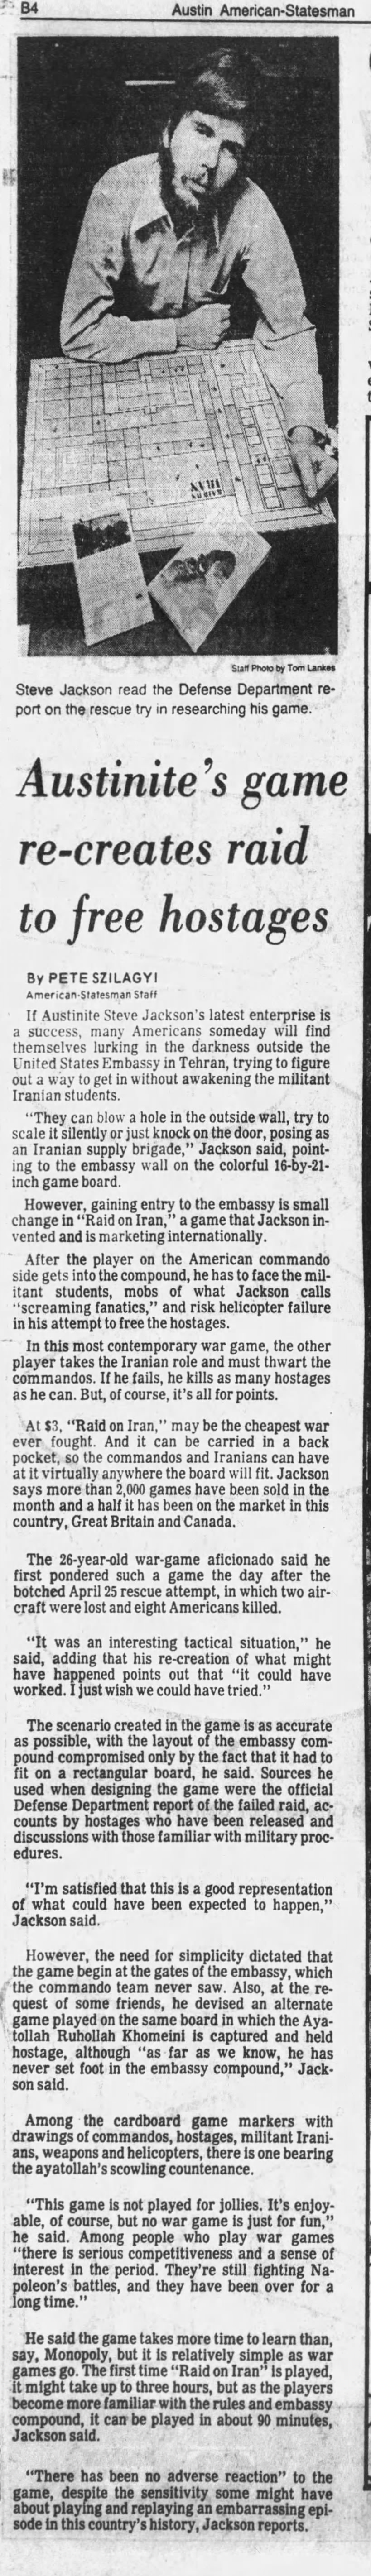 Austinite's Game Re-creates Raid to Free Hostages - December 4, 1980